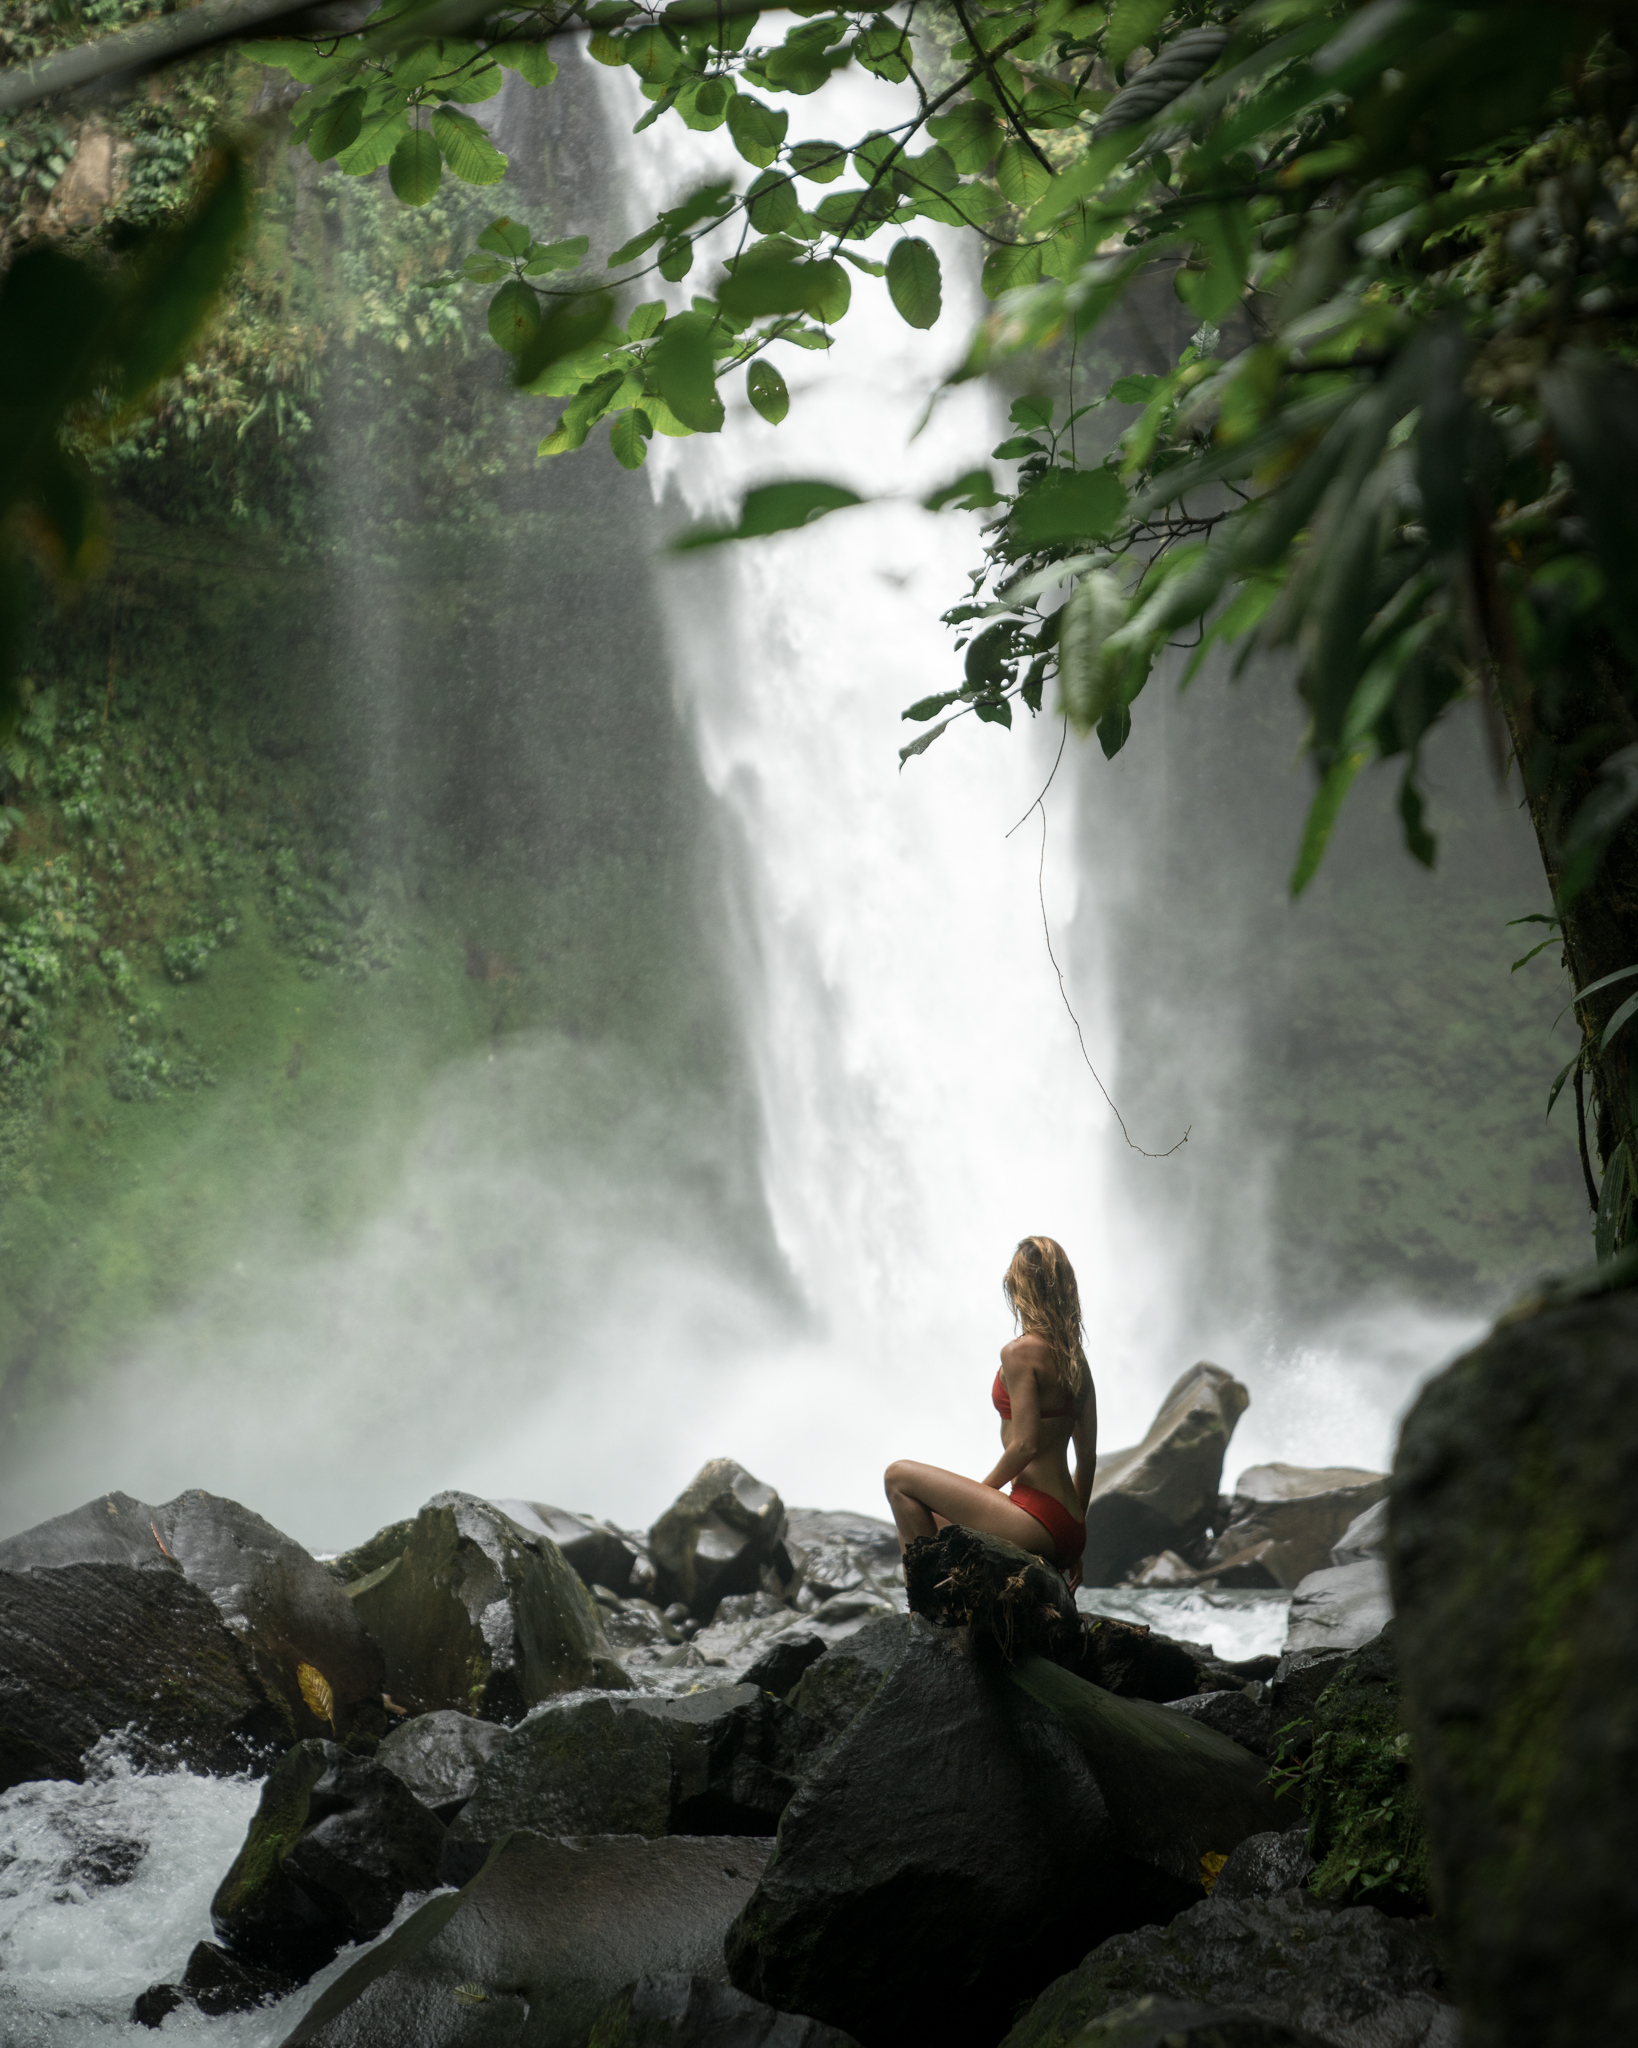 Enjoying the view at La Fortuna Waterfall in Costa Rica.